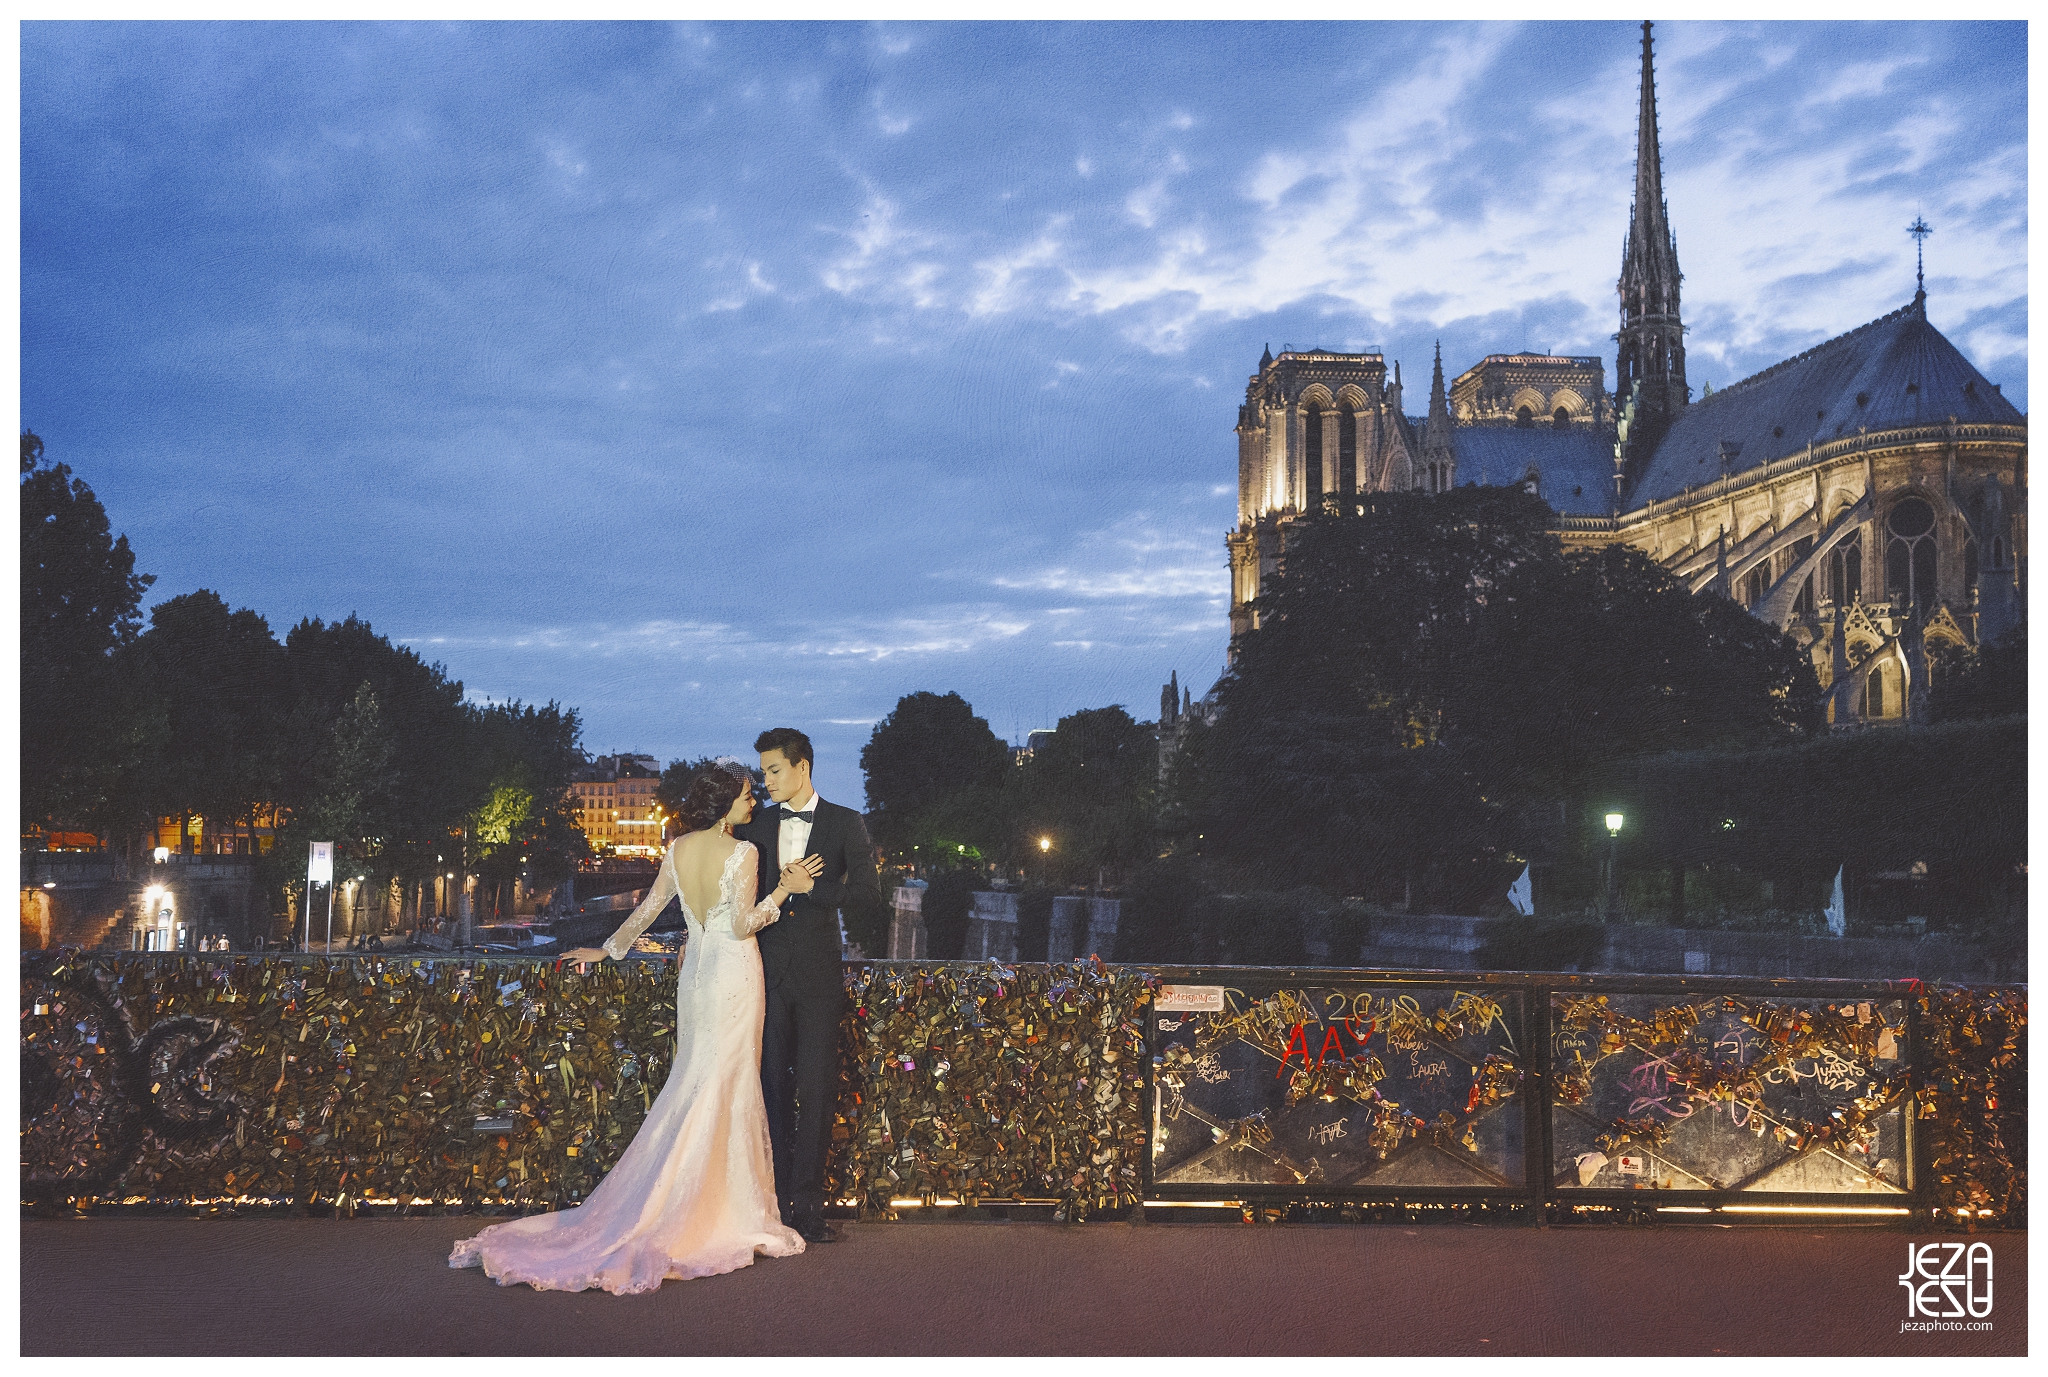 paris Pont Alexandre III The Eiffel Tower Musée du Louvre pre wedding engagement photo session by jeza photography zabrina deng and jeremy chan